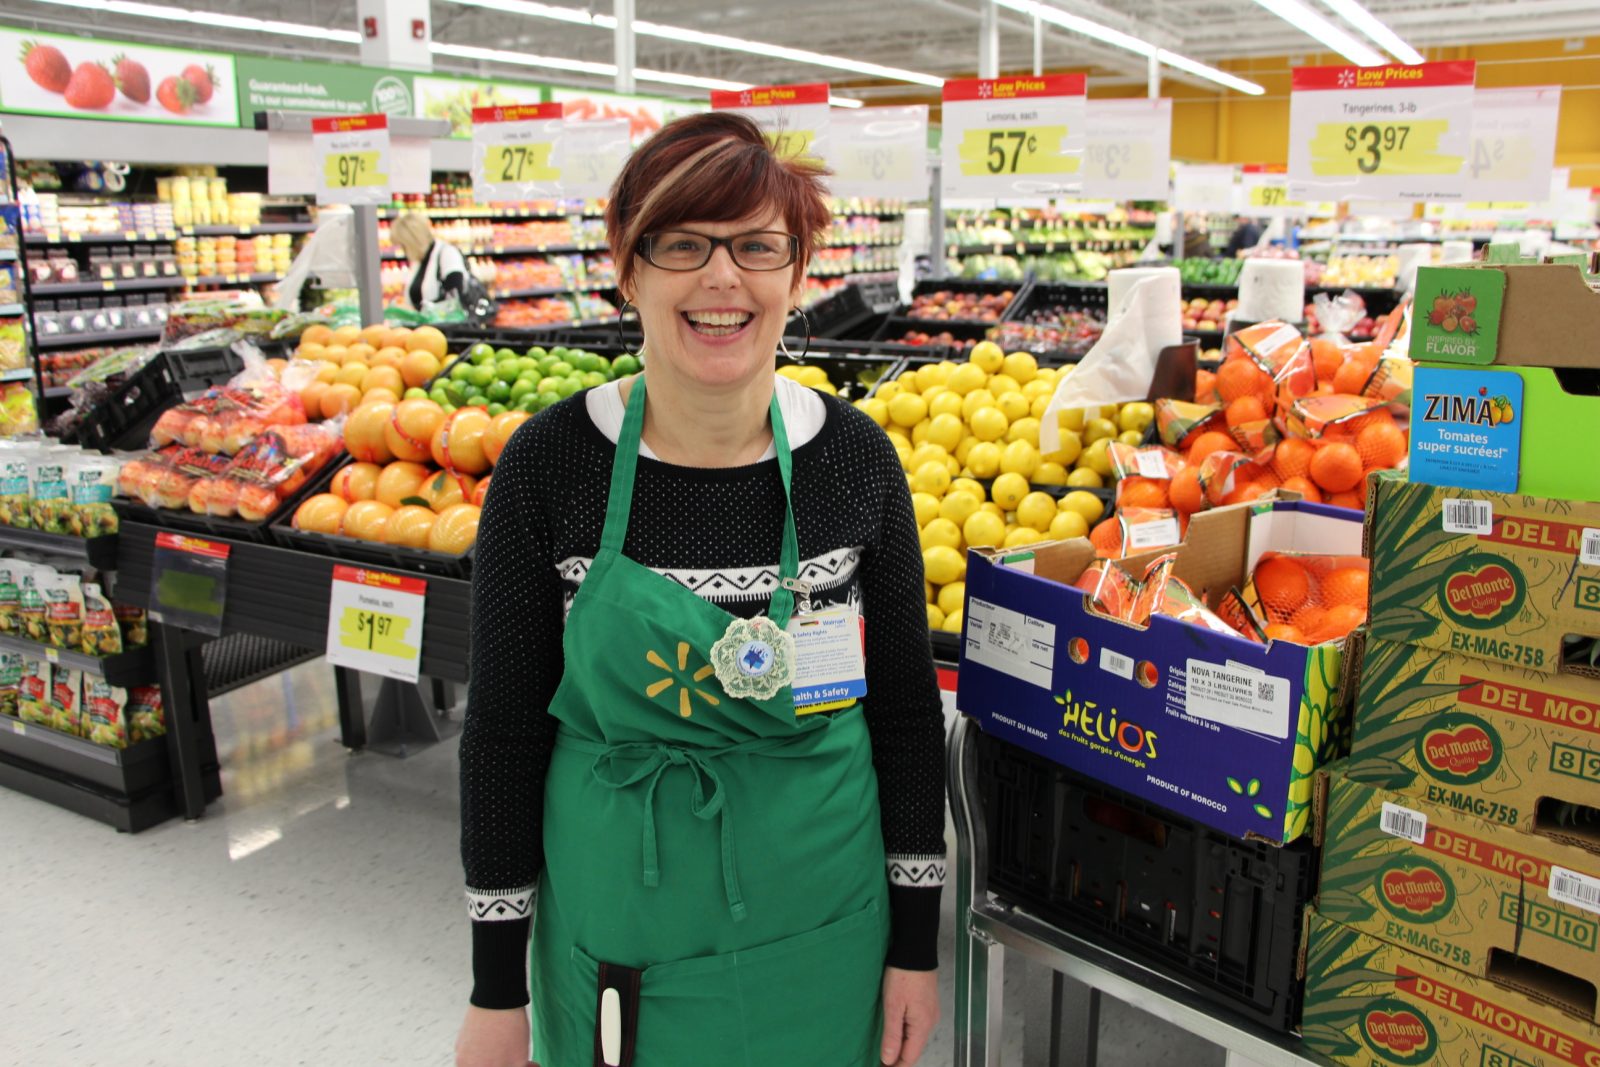 New Walmart Supercentre opens in Cornwall